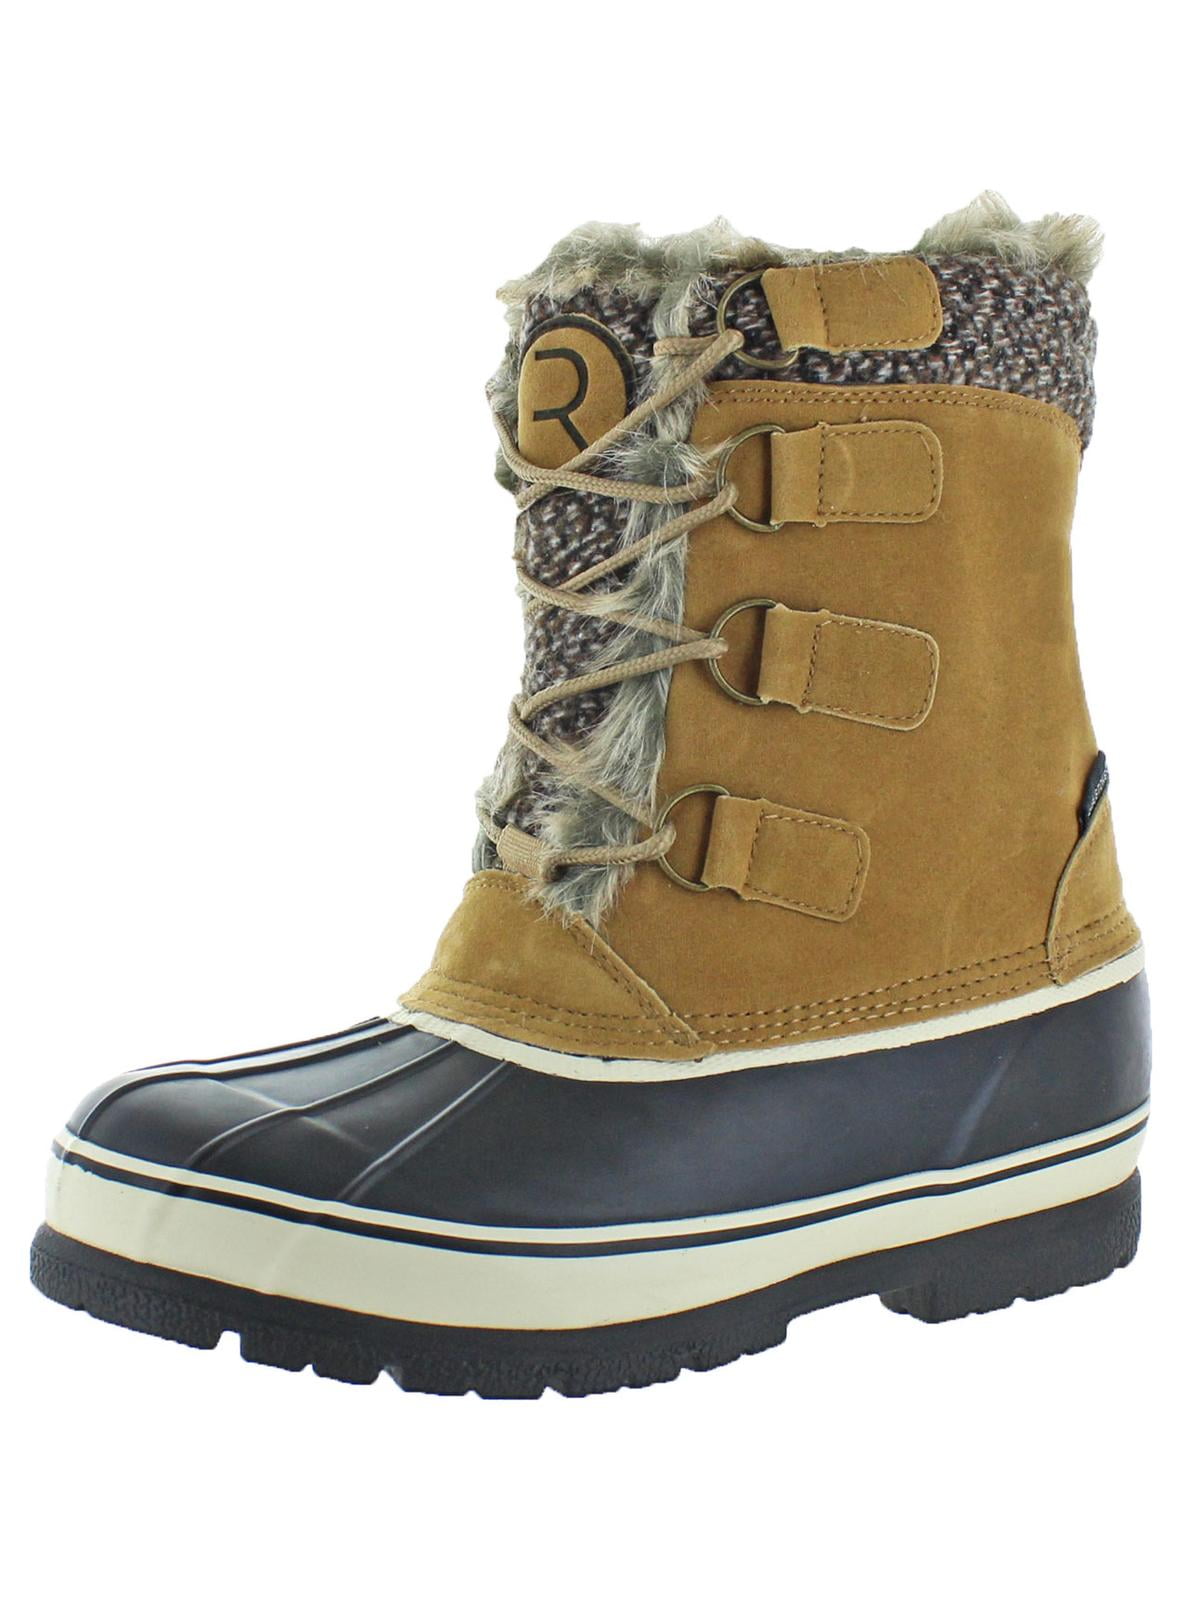 winter boots clearance walmart